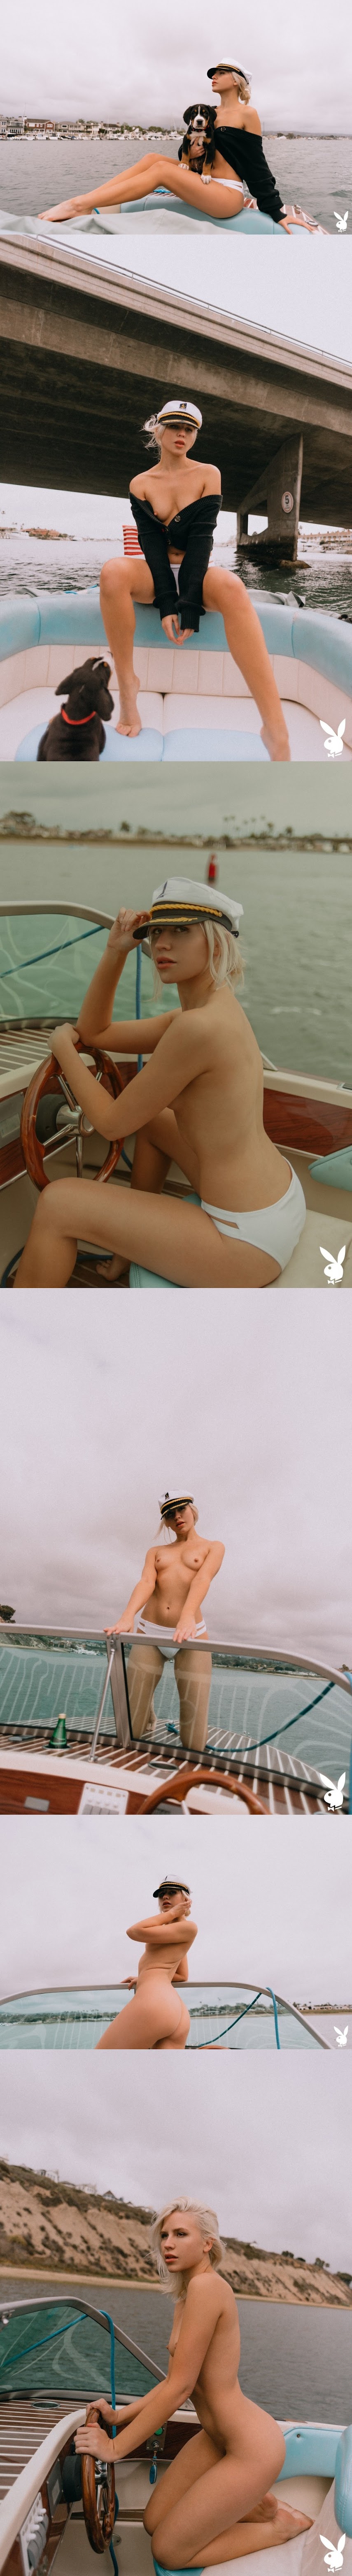 [Playboy Plus] Lennon Elizabeth in Out at Sea 1631079256_lennon32_0030